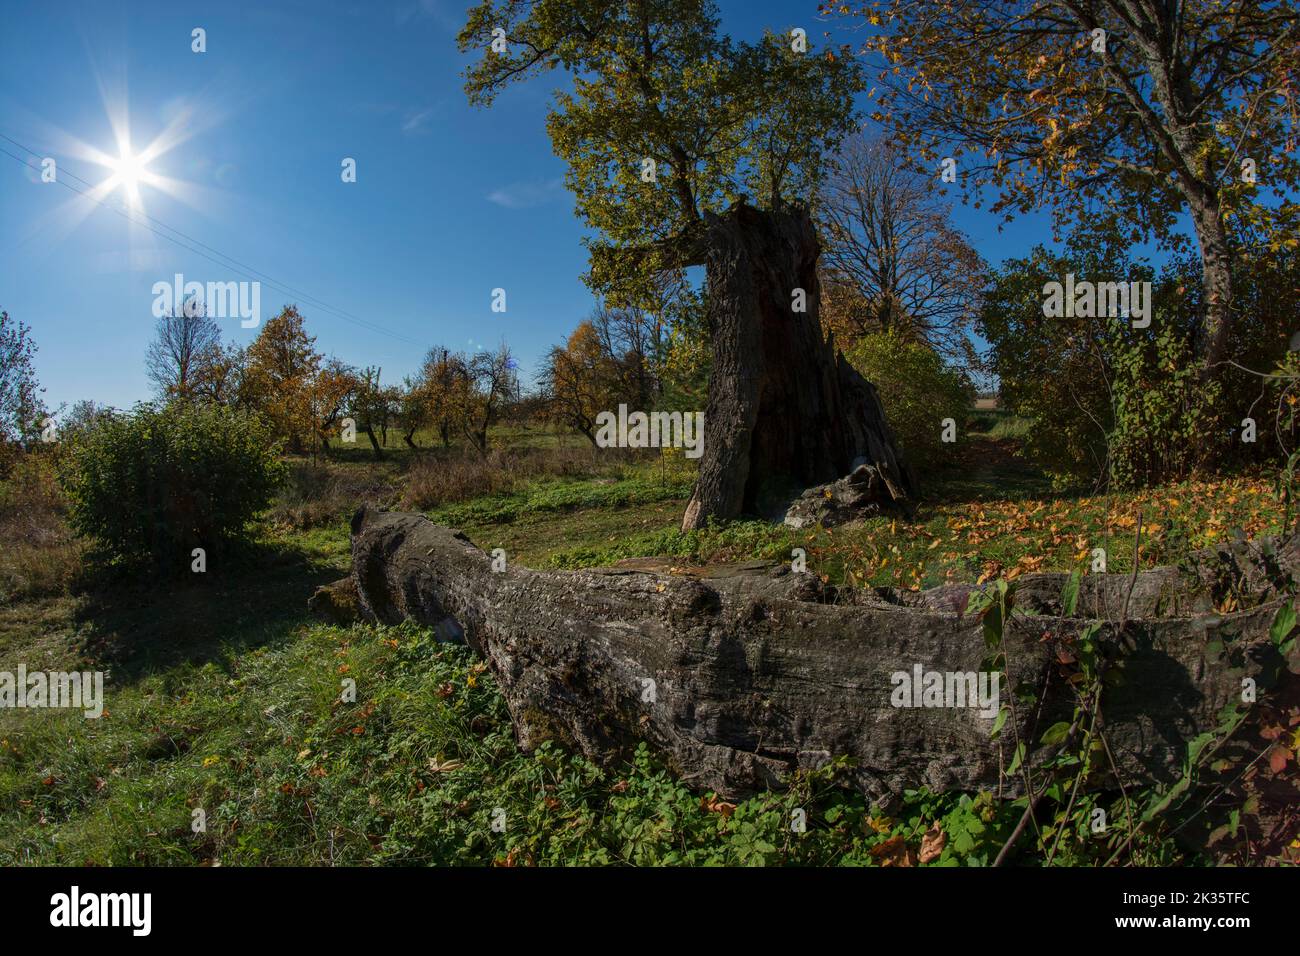 Majestic century-old broken oak tree, Lithuania Stock Photo